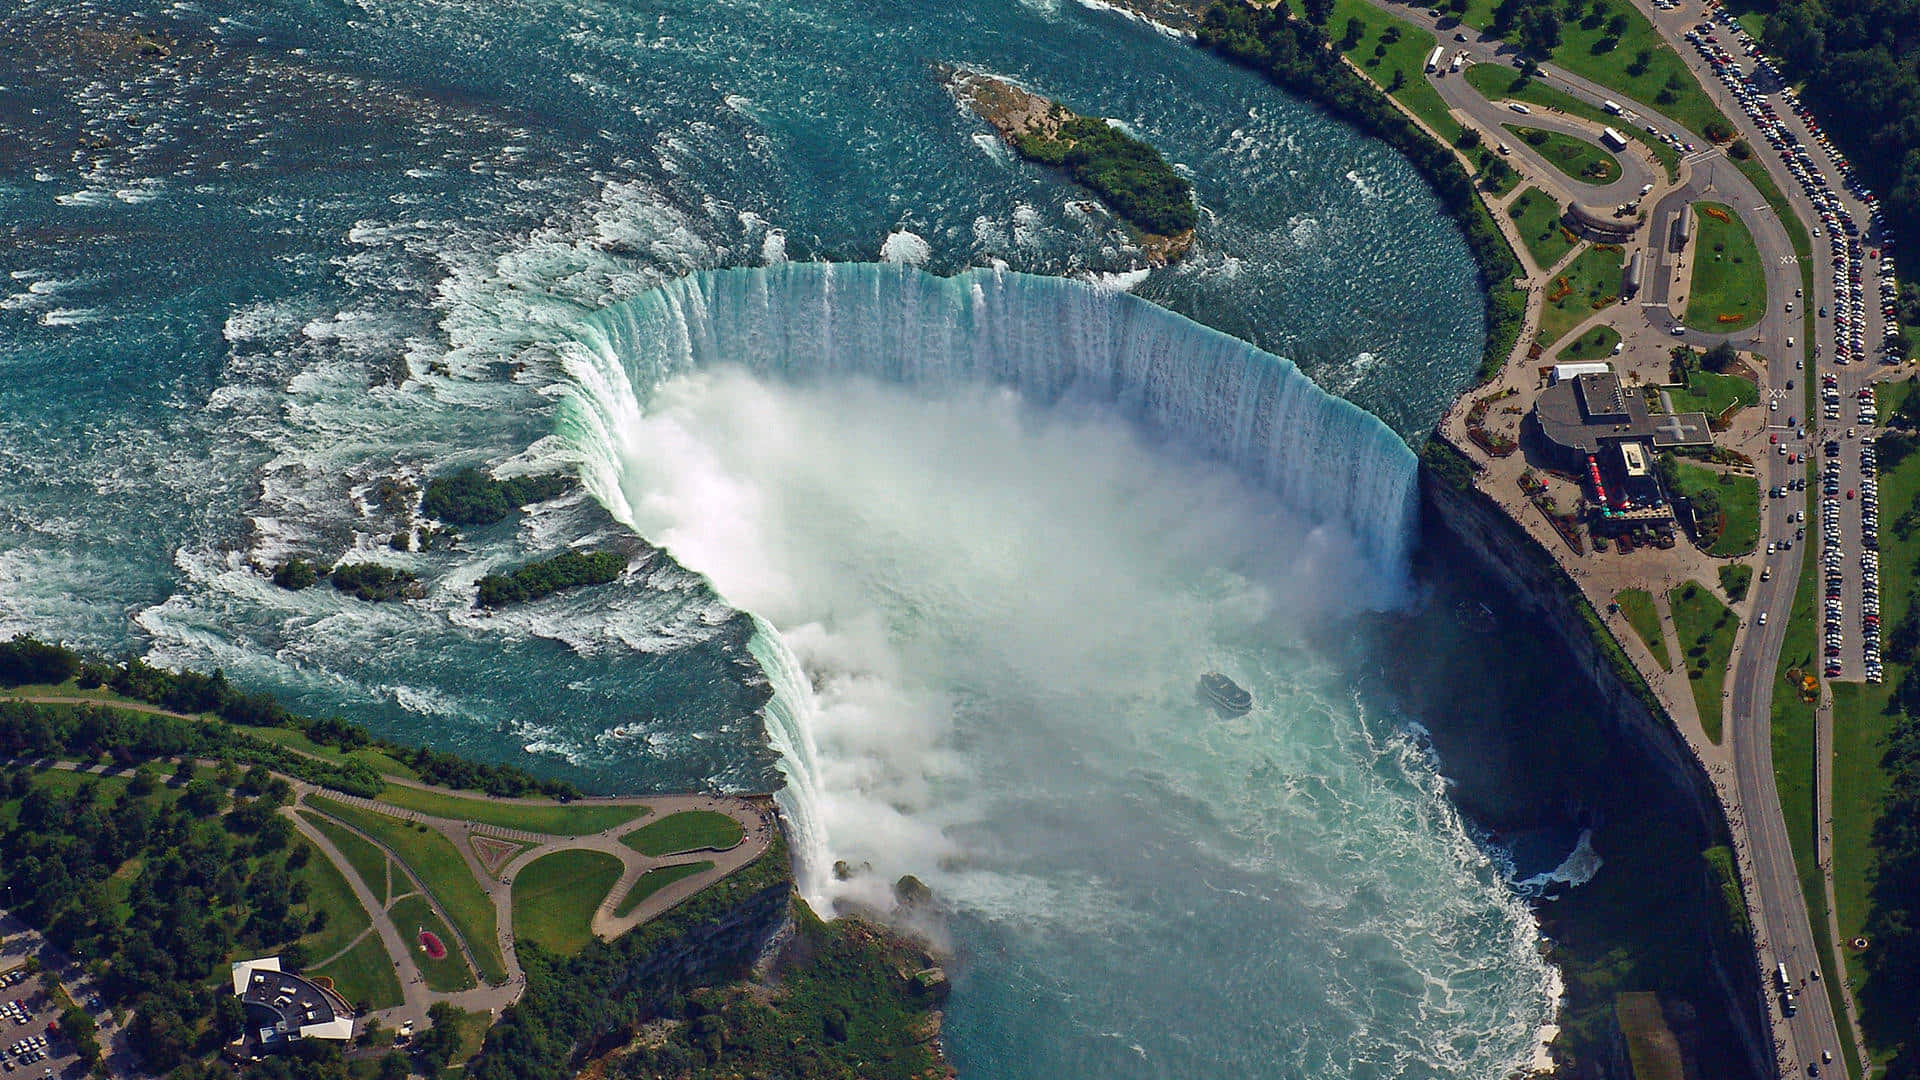 The breathtaking beauty of Niagara Falls